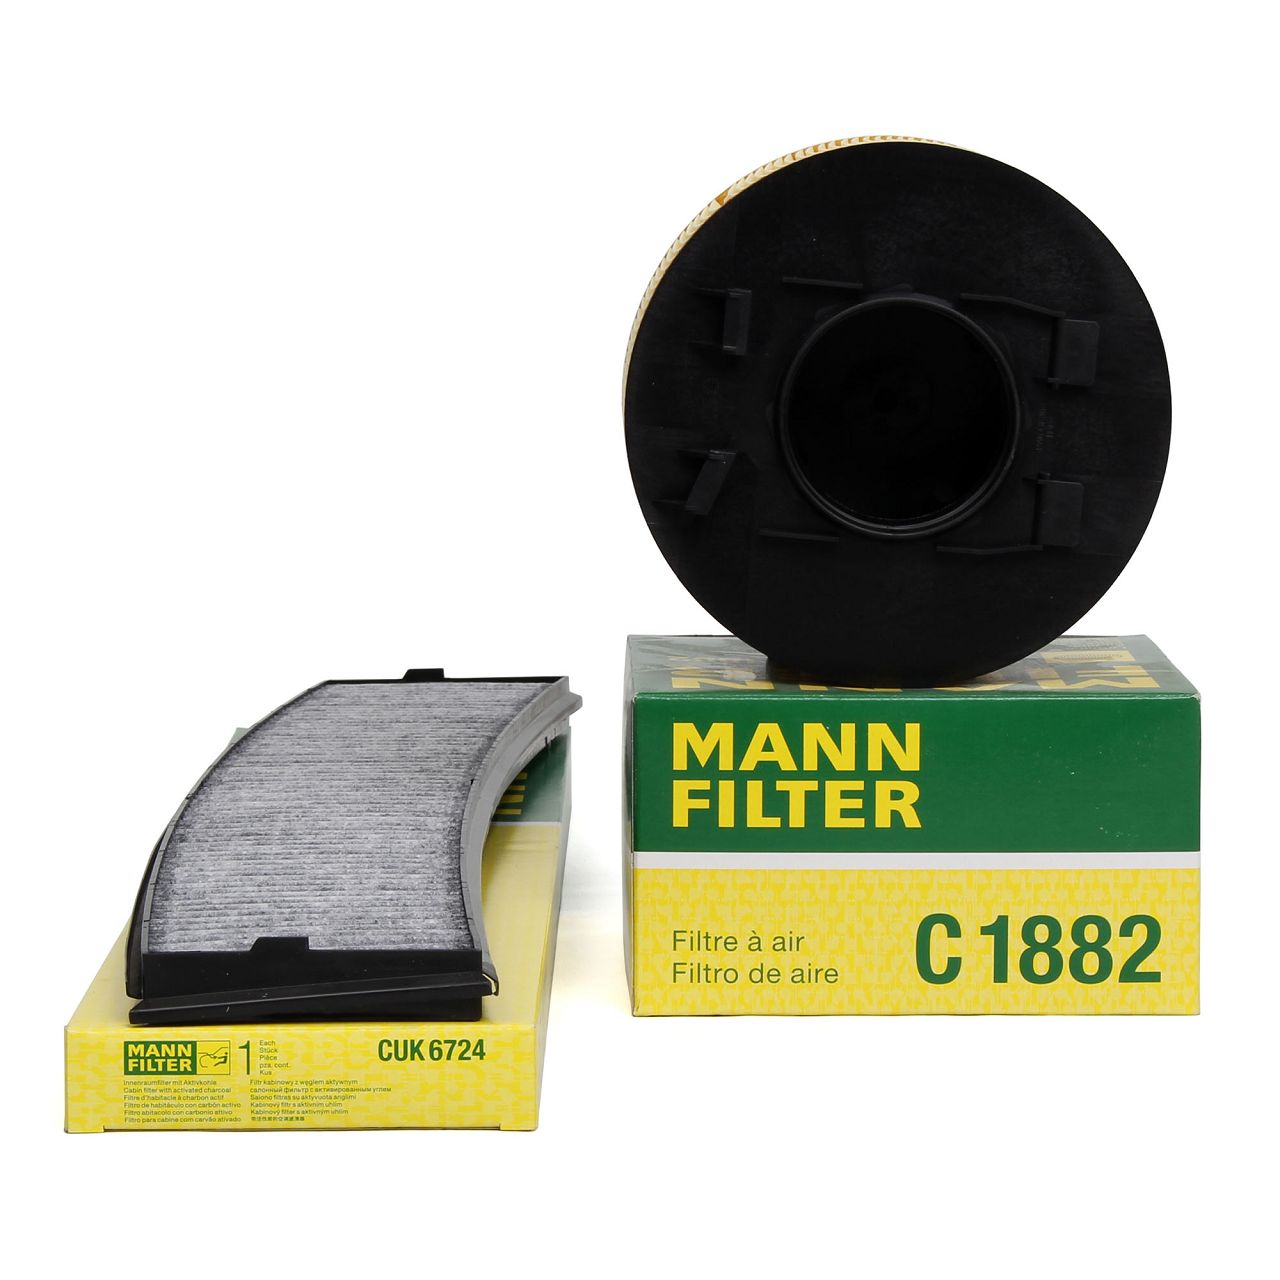 MANN Filterset Innenraum + Luftfilter BMW 3er E46 316i 318i N40 N42 N45 N46 115-150 PS